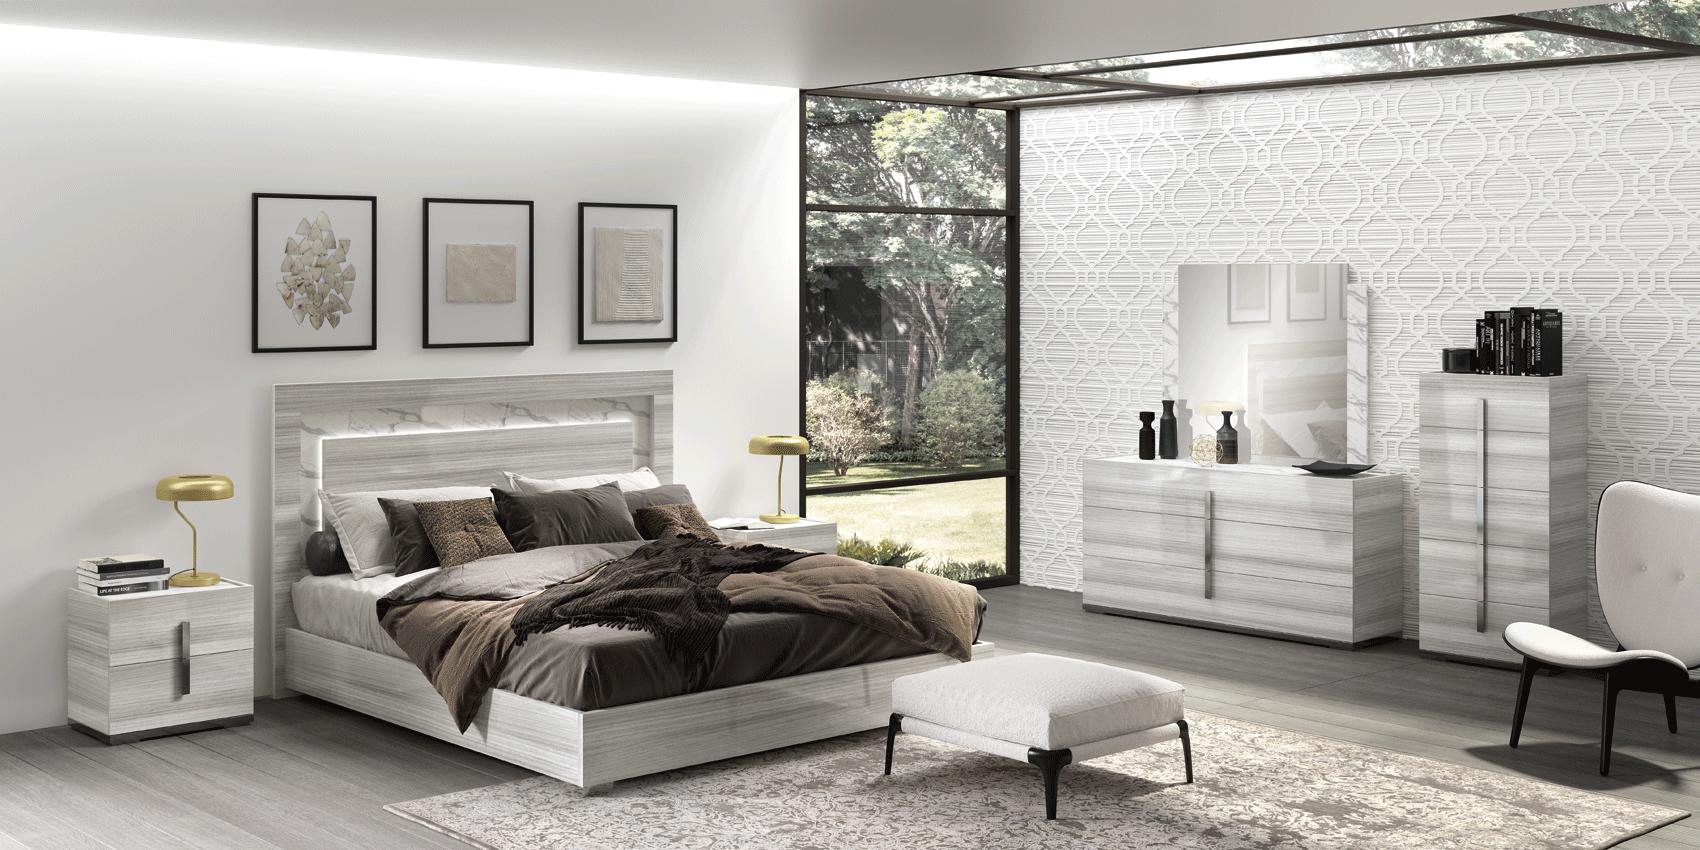 Contemporary, Modern Platform Bedroom Set CARRARABEDQSGREY CARRARABEDQSGREY-2NDMC-6PC in Gray 